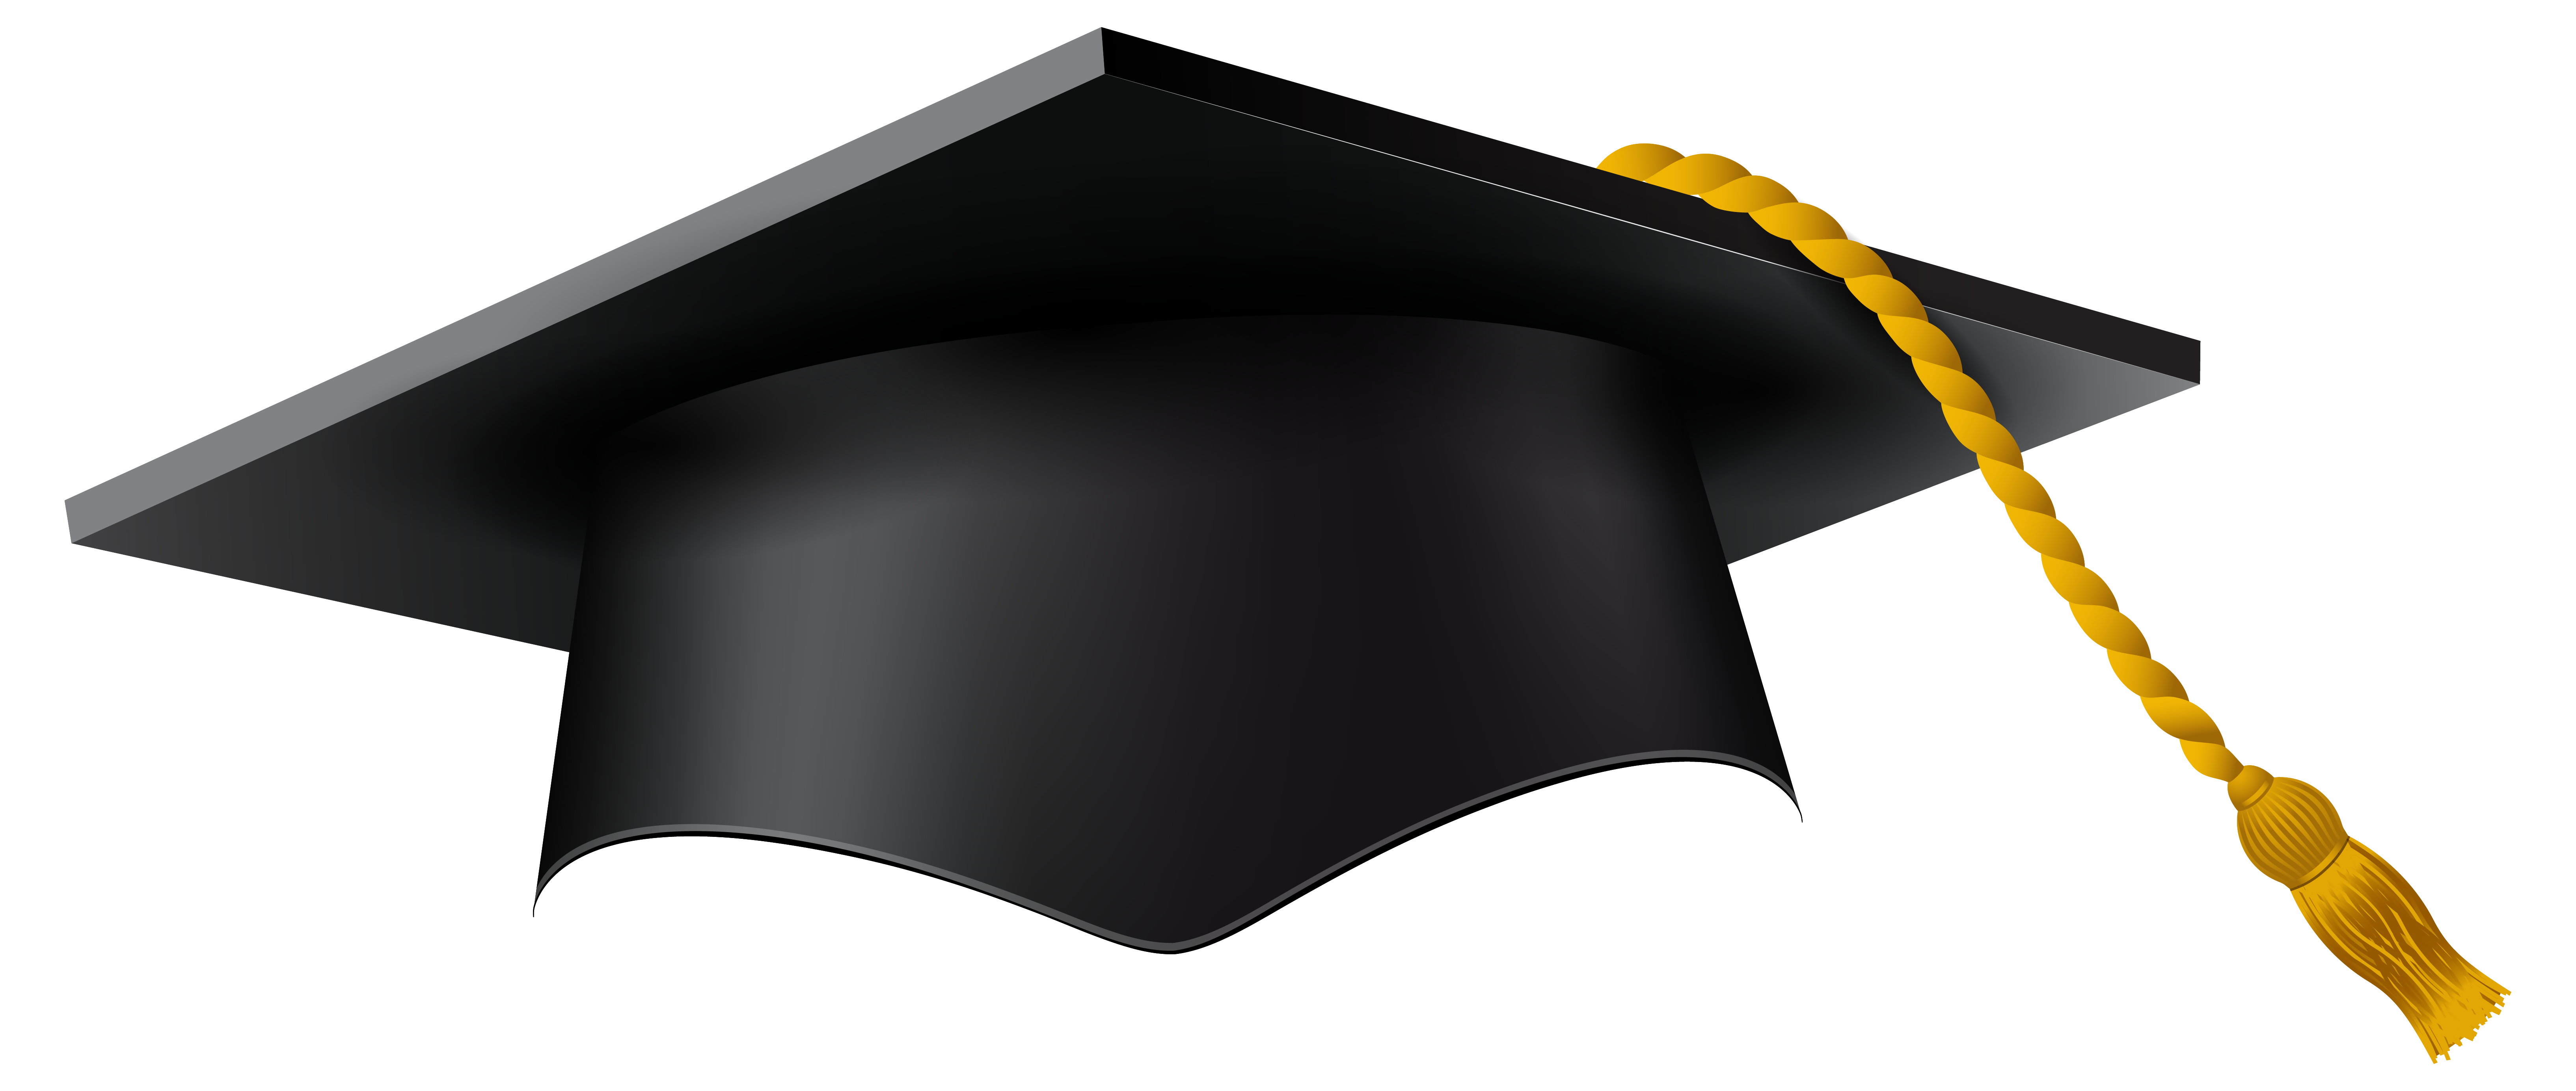 Graduation cap png image. Diploma clipart transparent background